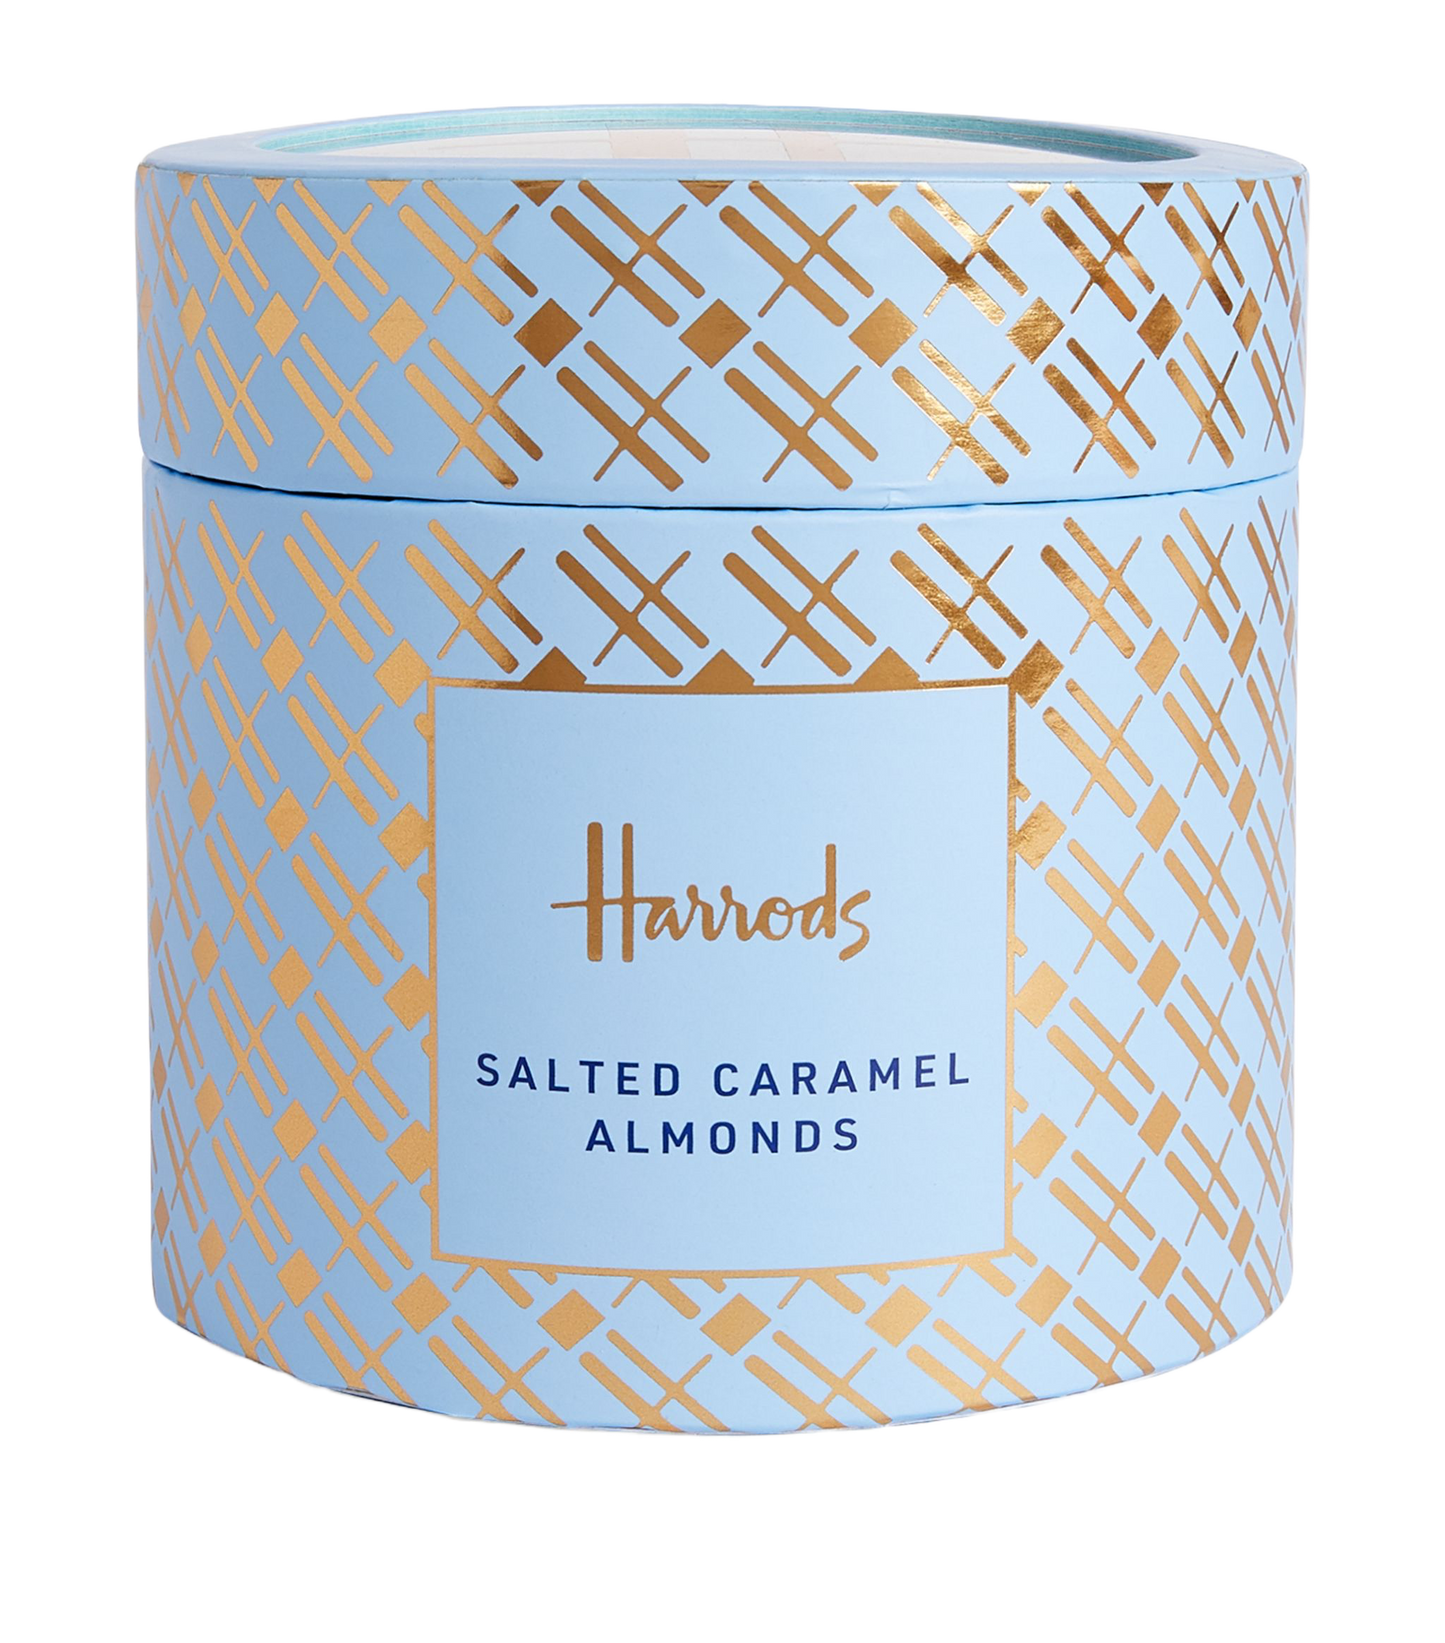 HARRODS Salted Caramel Almonds